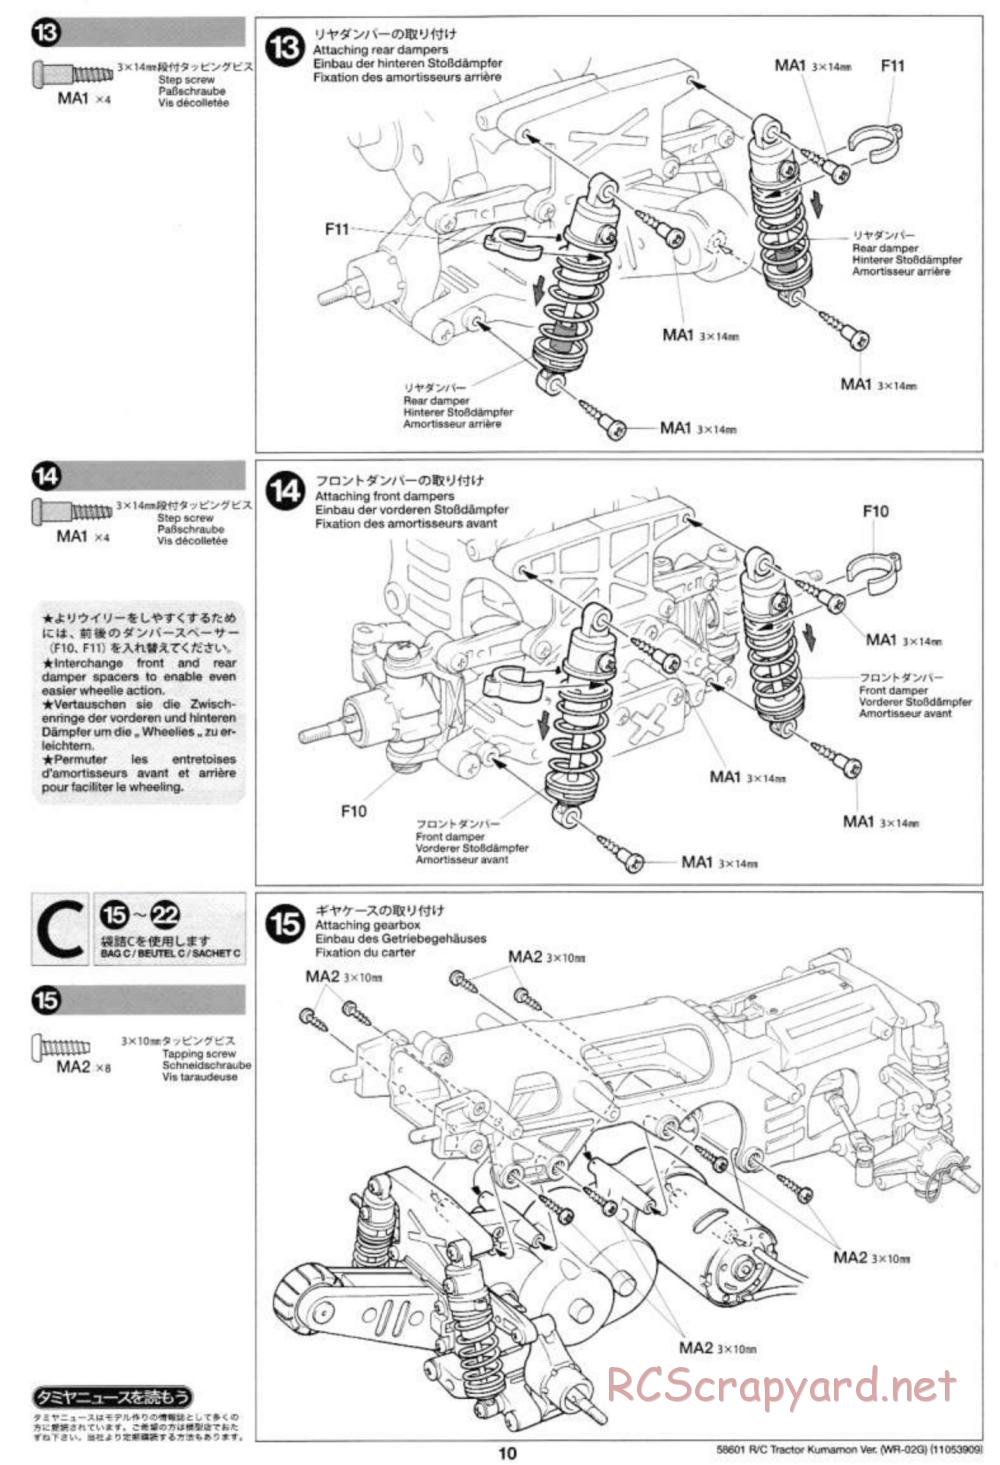 Tamiya - Tractor Kumamon Version Chassis - Manual - Page 10